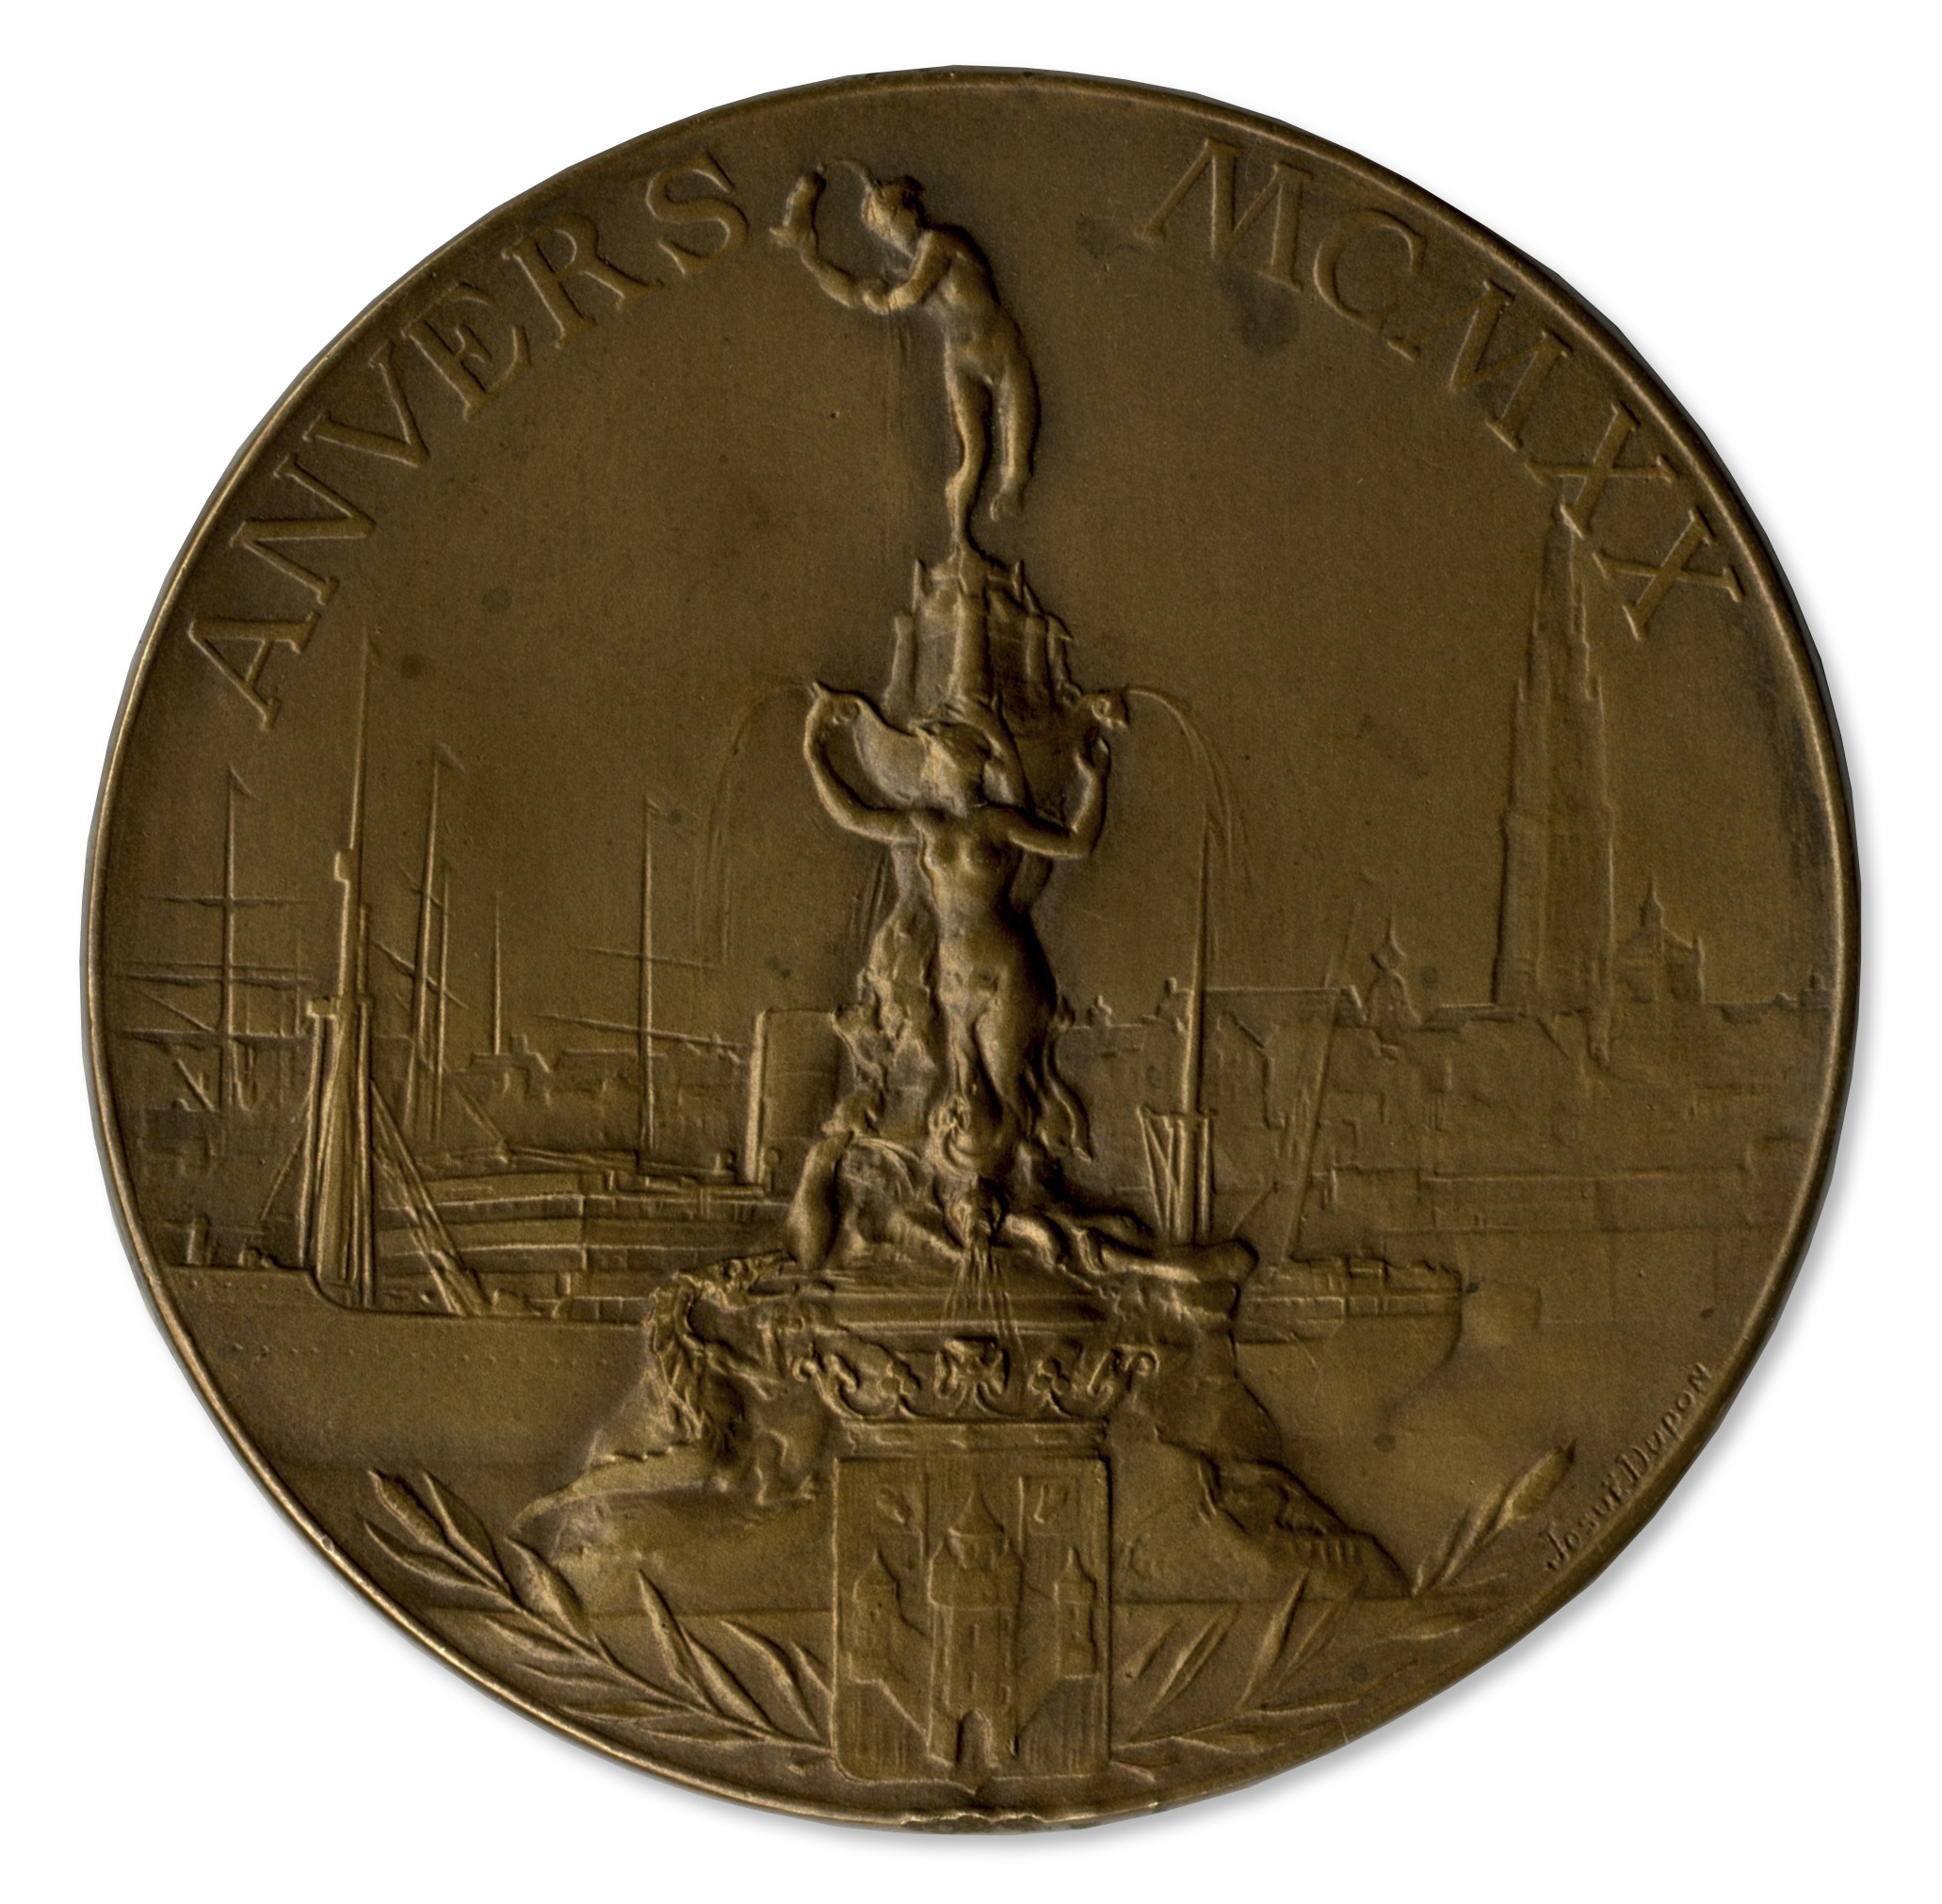 Olympics Memorabilia Bronze Olympic Medal From the 1920 Summer Olympics, Held in Antwerp, Belgium - Image 5 of 5